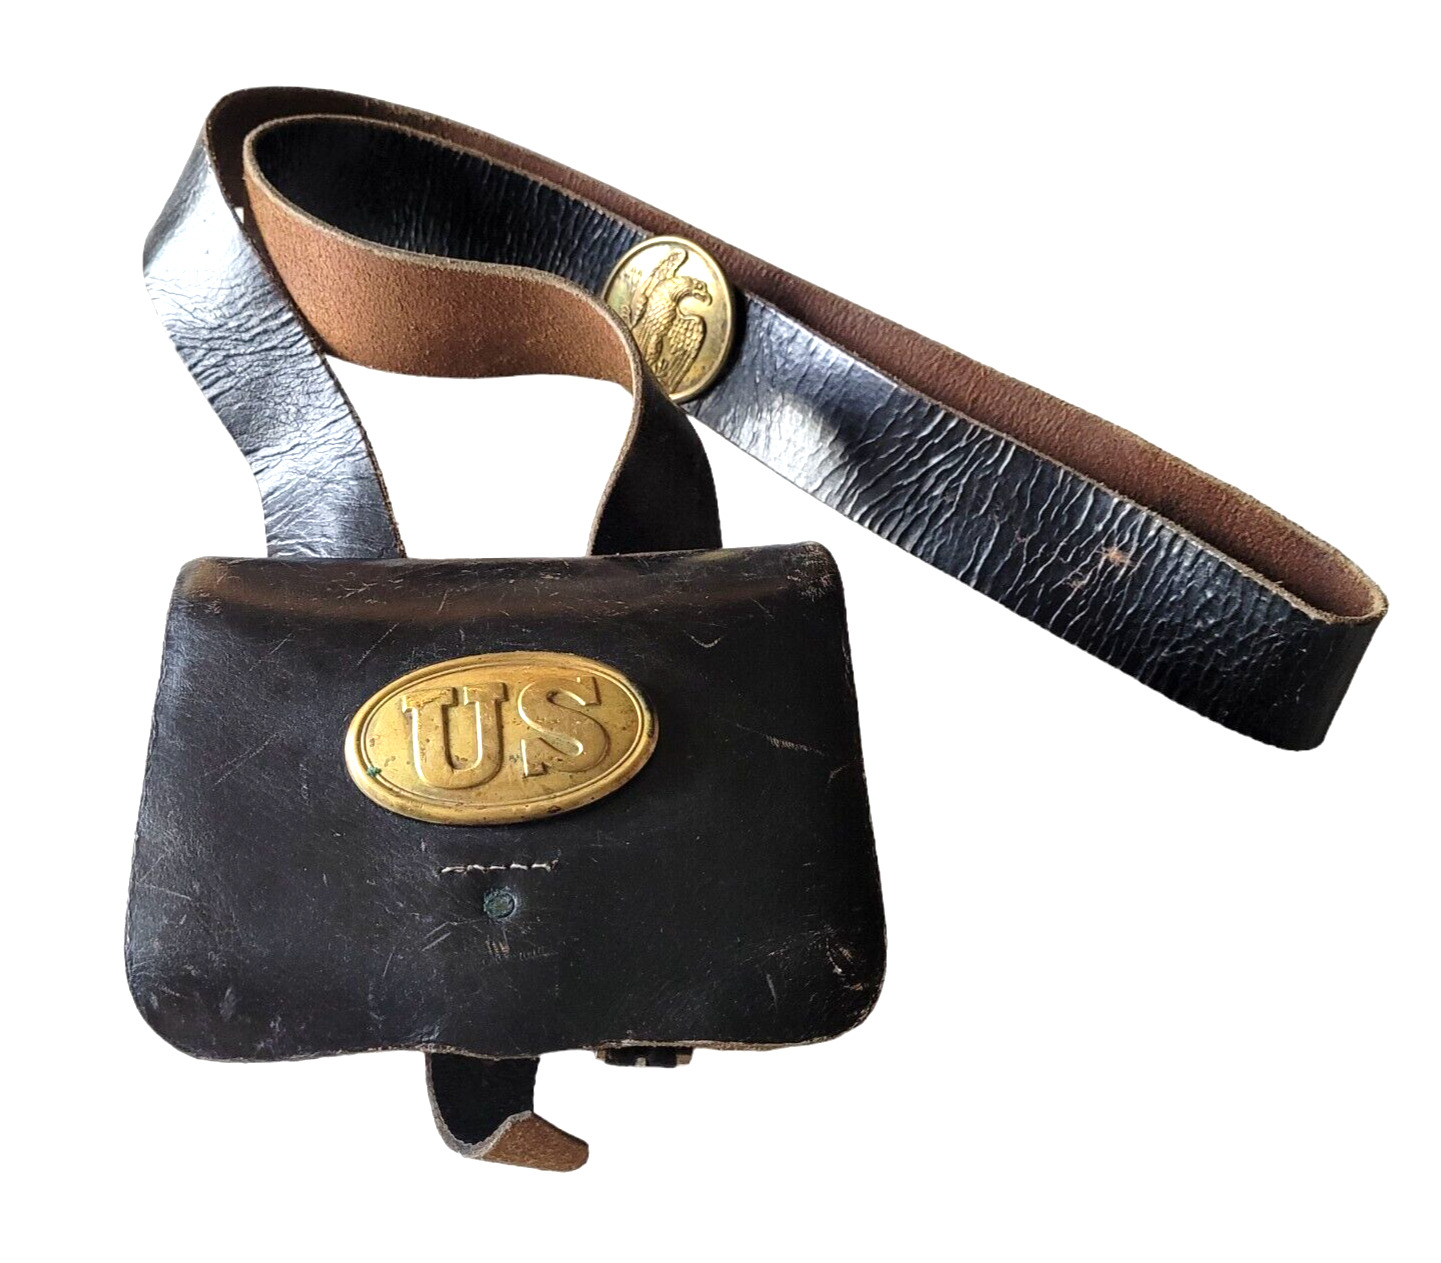 Civil War Civil U.S. Cartridge Bag Pouch Tins Sling Vintage Repro Black Leather